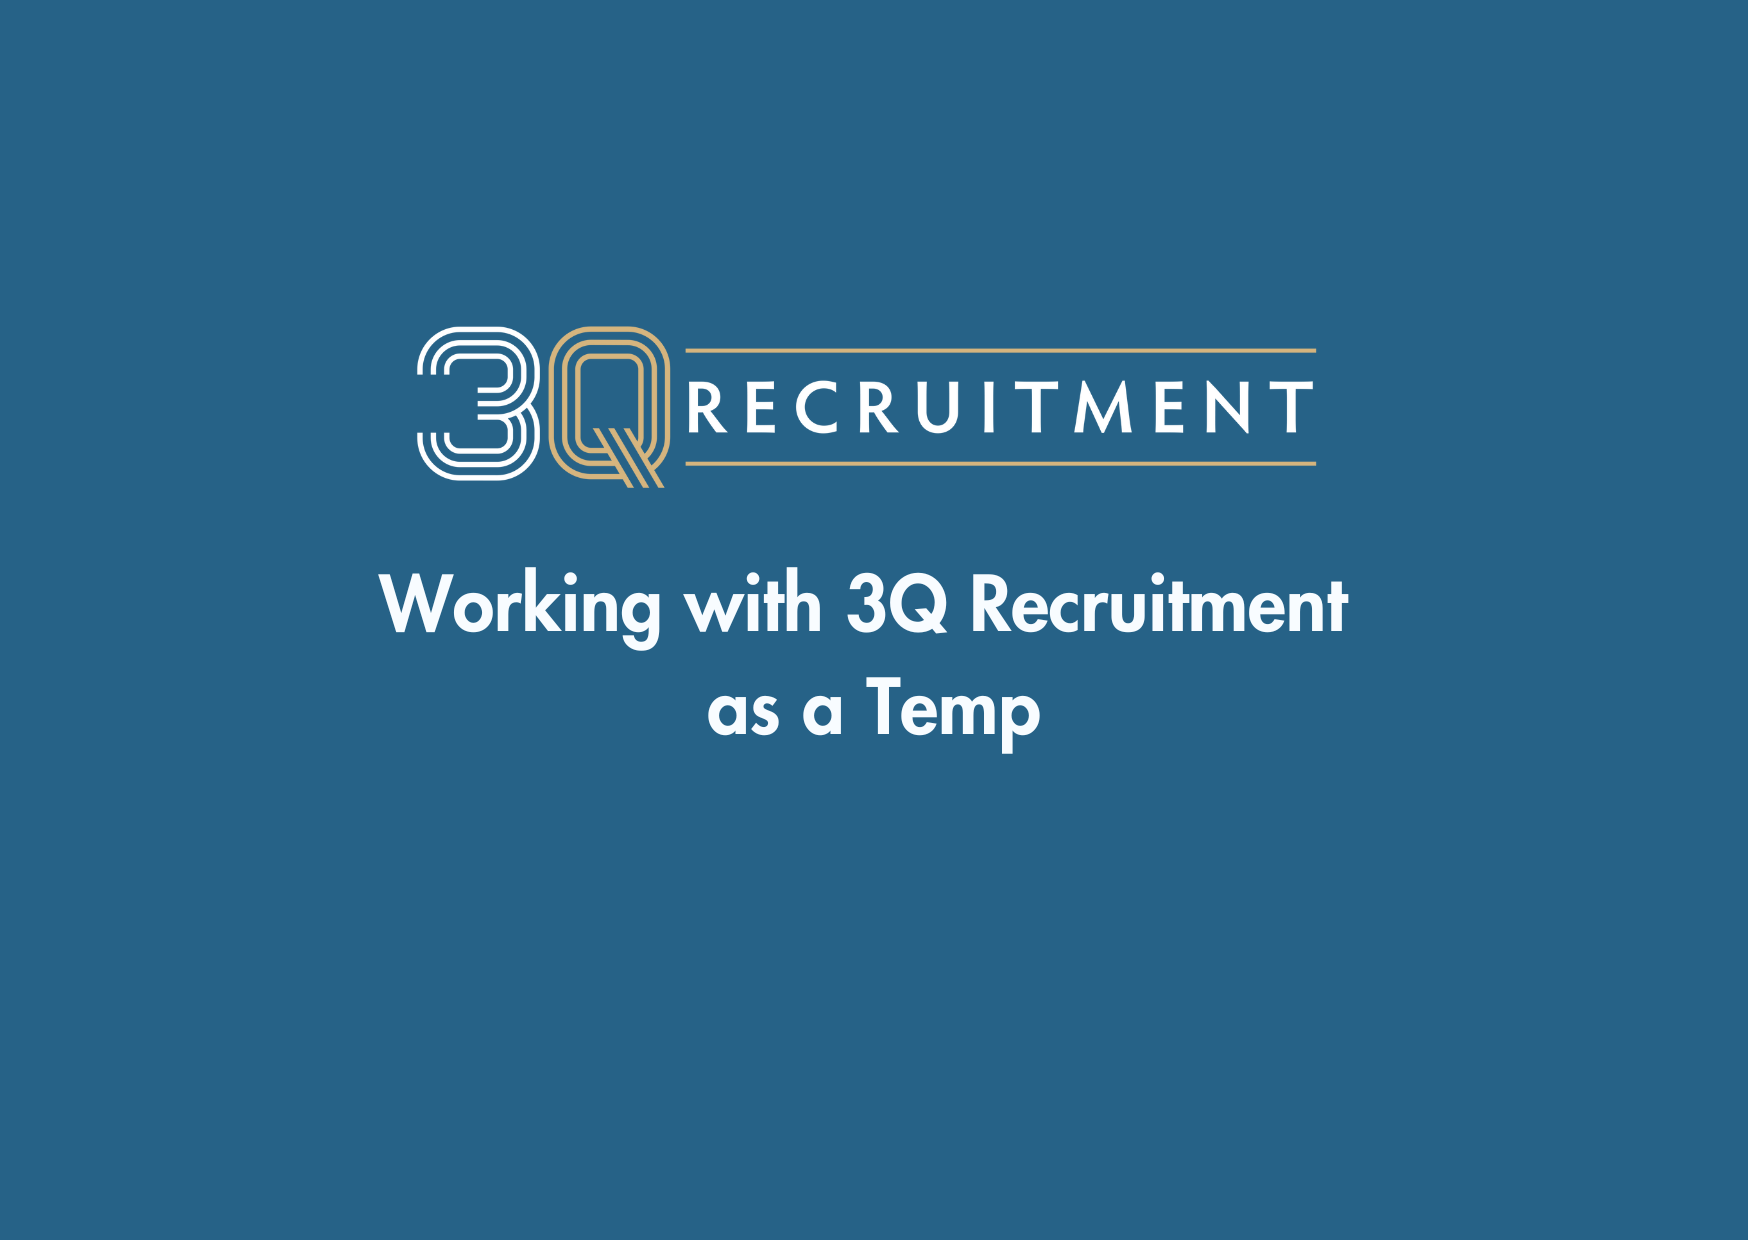 3Q Recruitment Working with 3Q Recruitment as a Temp